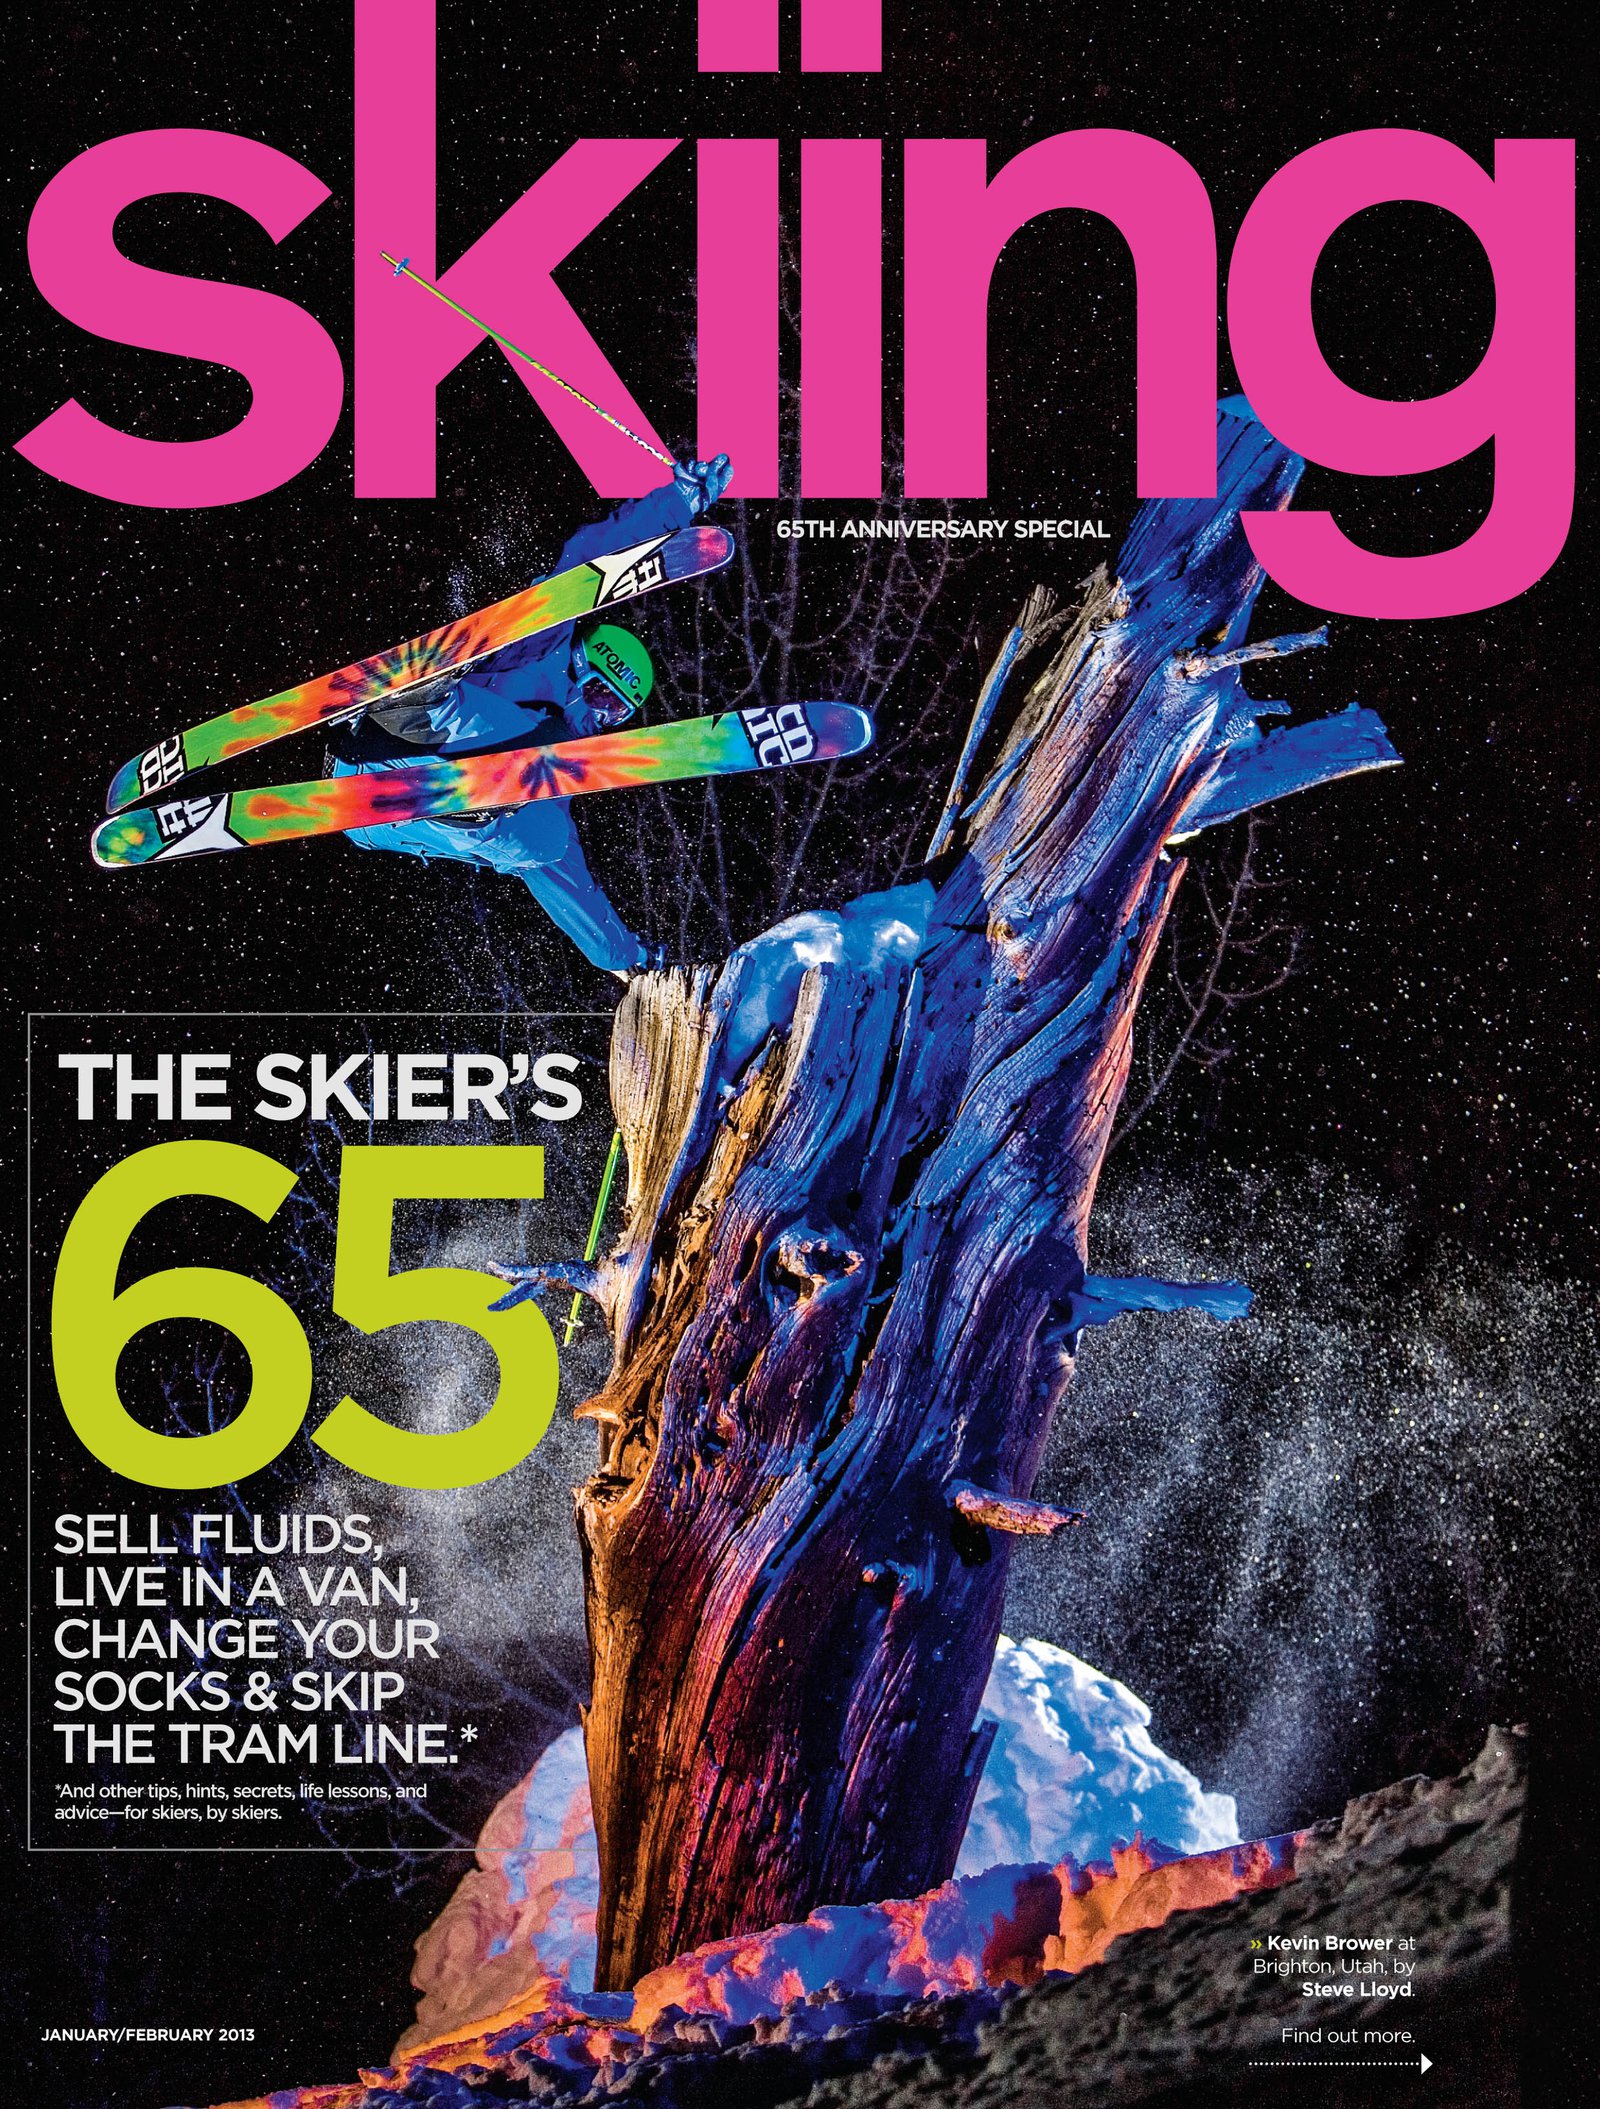 Skiing Magazine Jan/Feb '13 issue cover